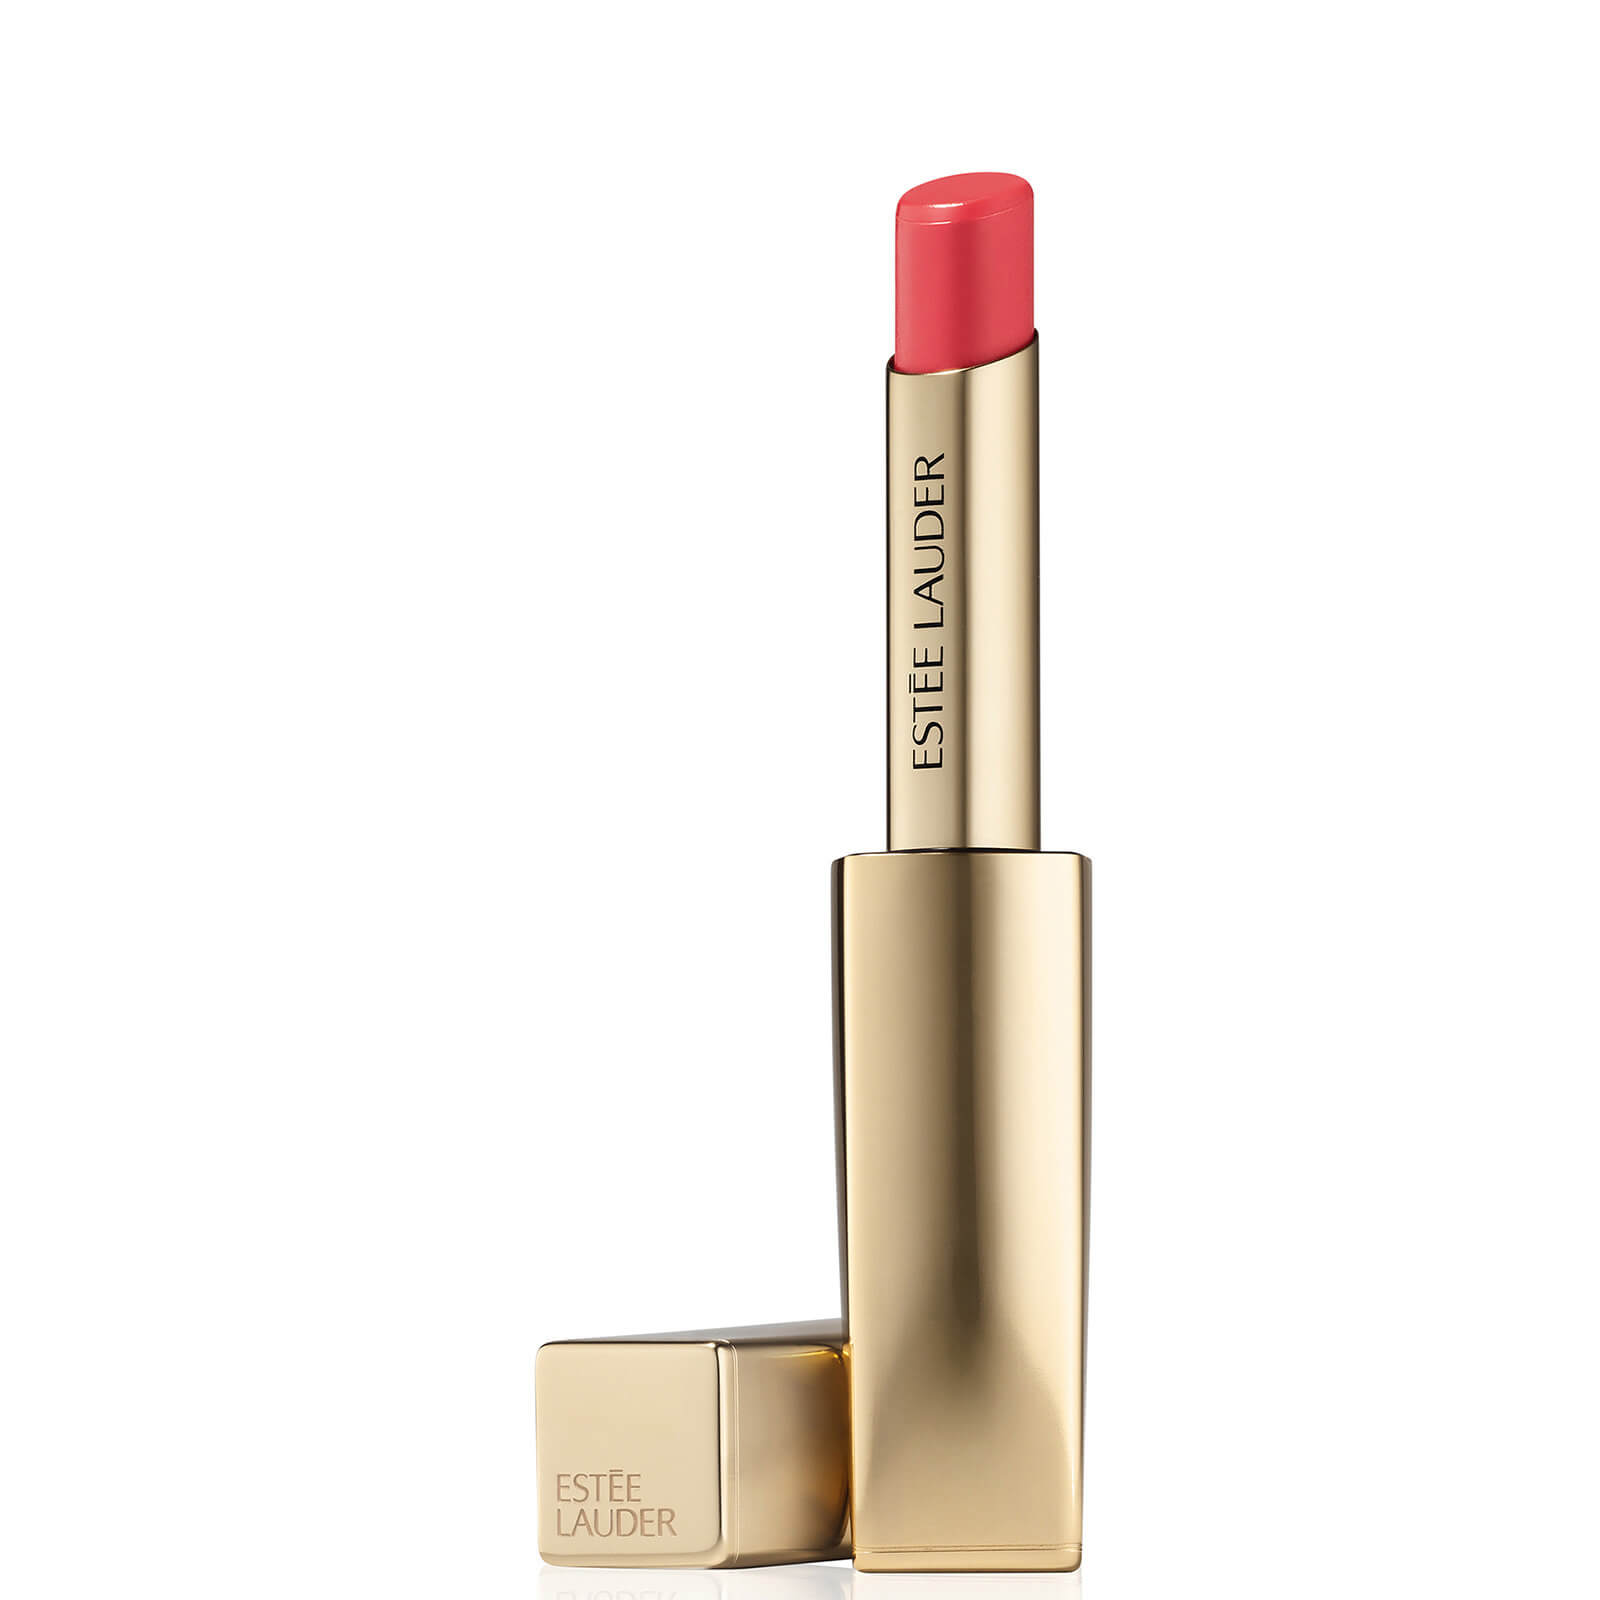 estee lauder estÃ©e lauder pure colour illuminating shine sheer shine lipstick 1.8g - various shades - saucy